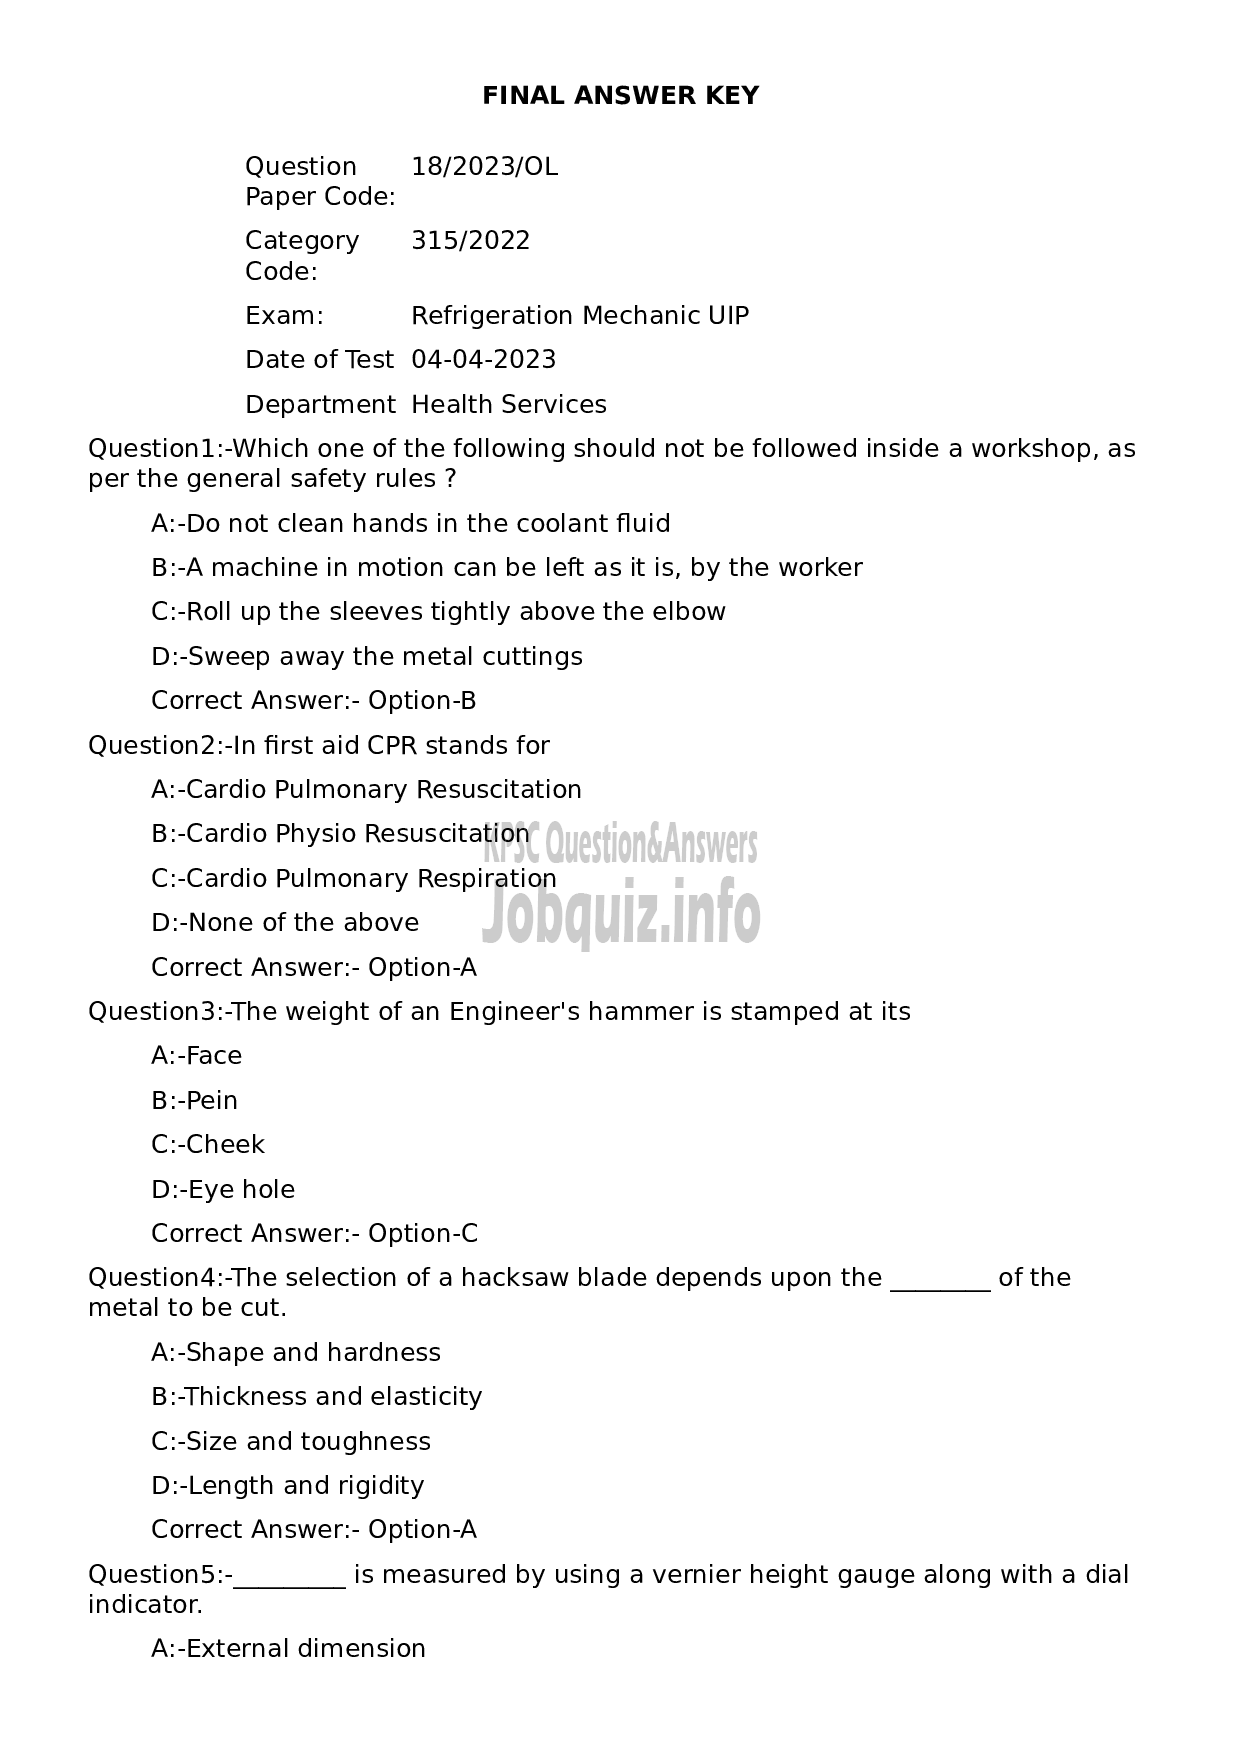 Kerala PSC Question Paper - Refrigeration Mechanic UIP-1